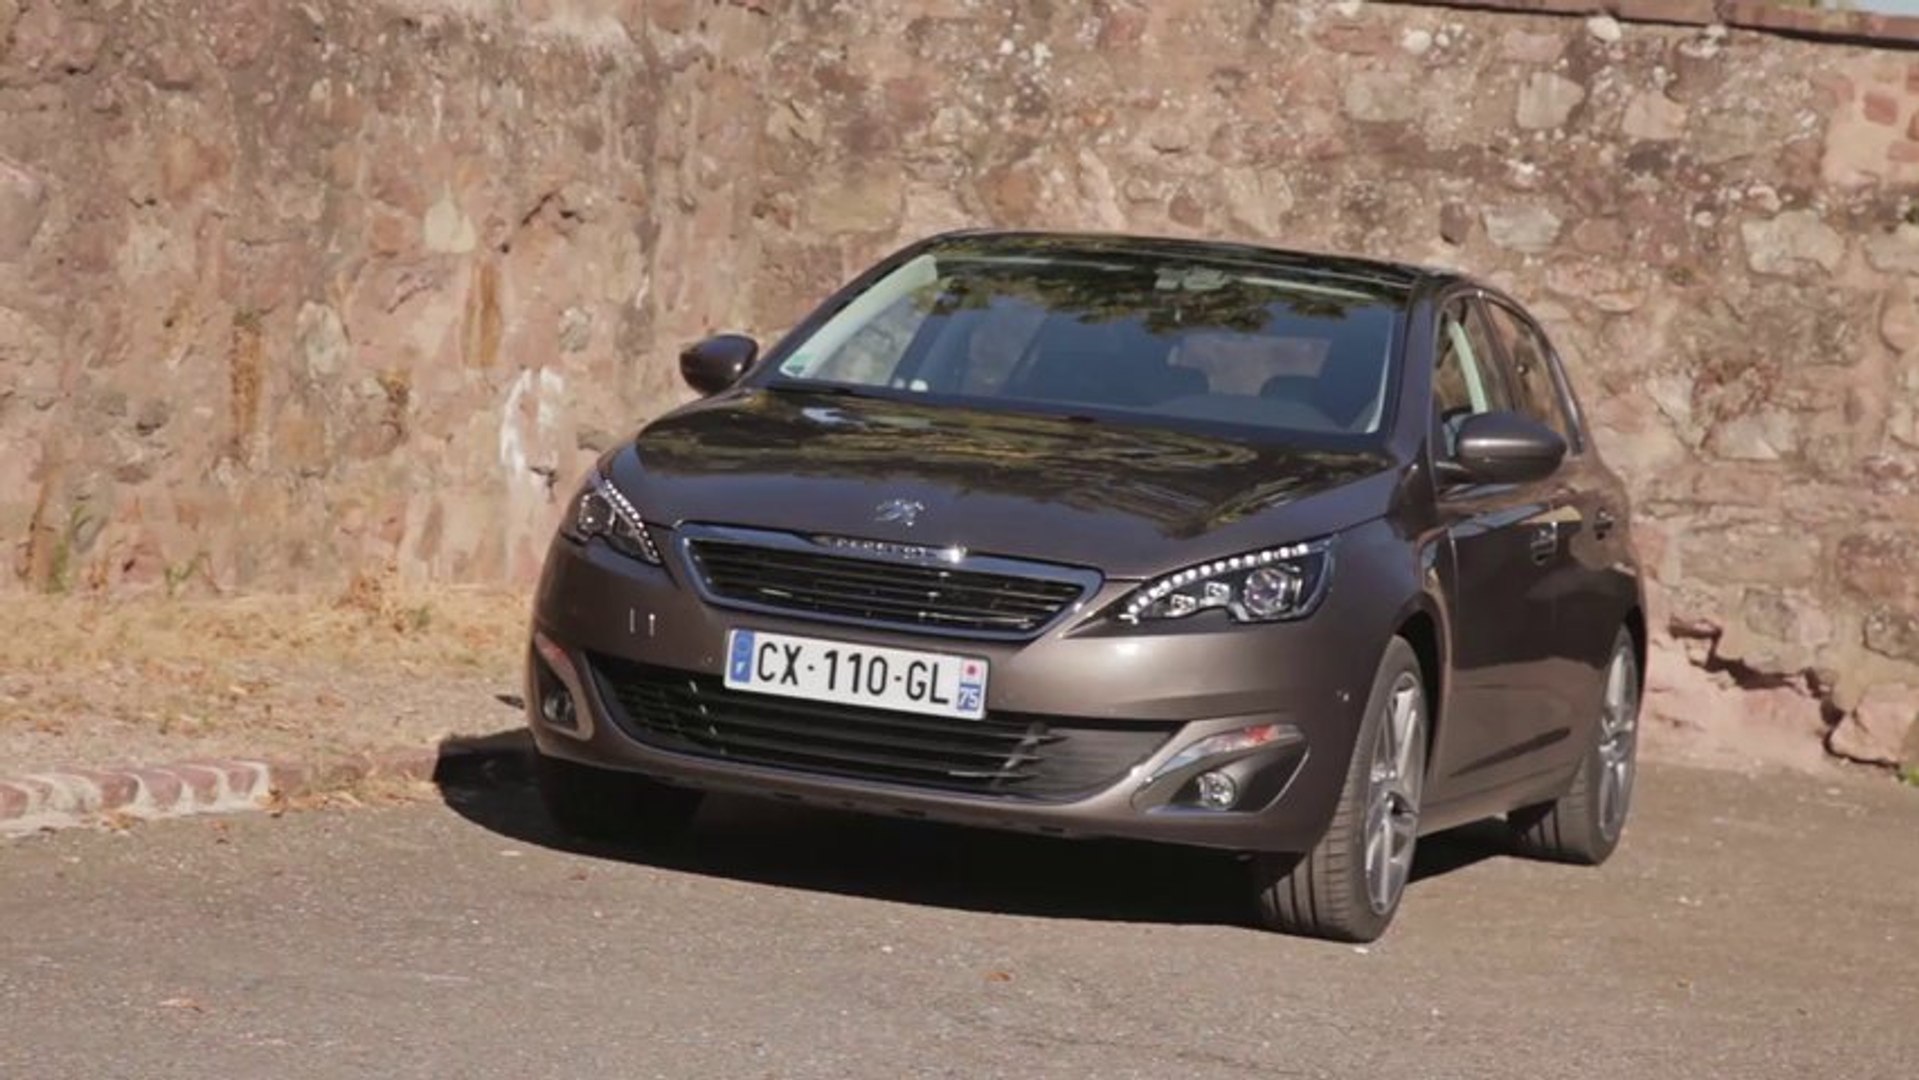 Essai Peugeot 308 1.6 e-HDI 115 Allure 2013 - Vidéo Dailymotion